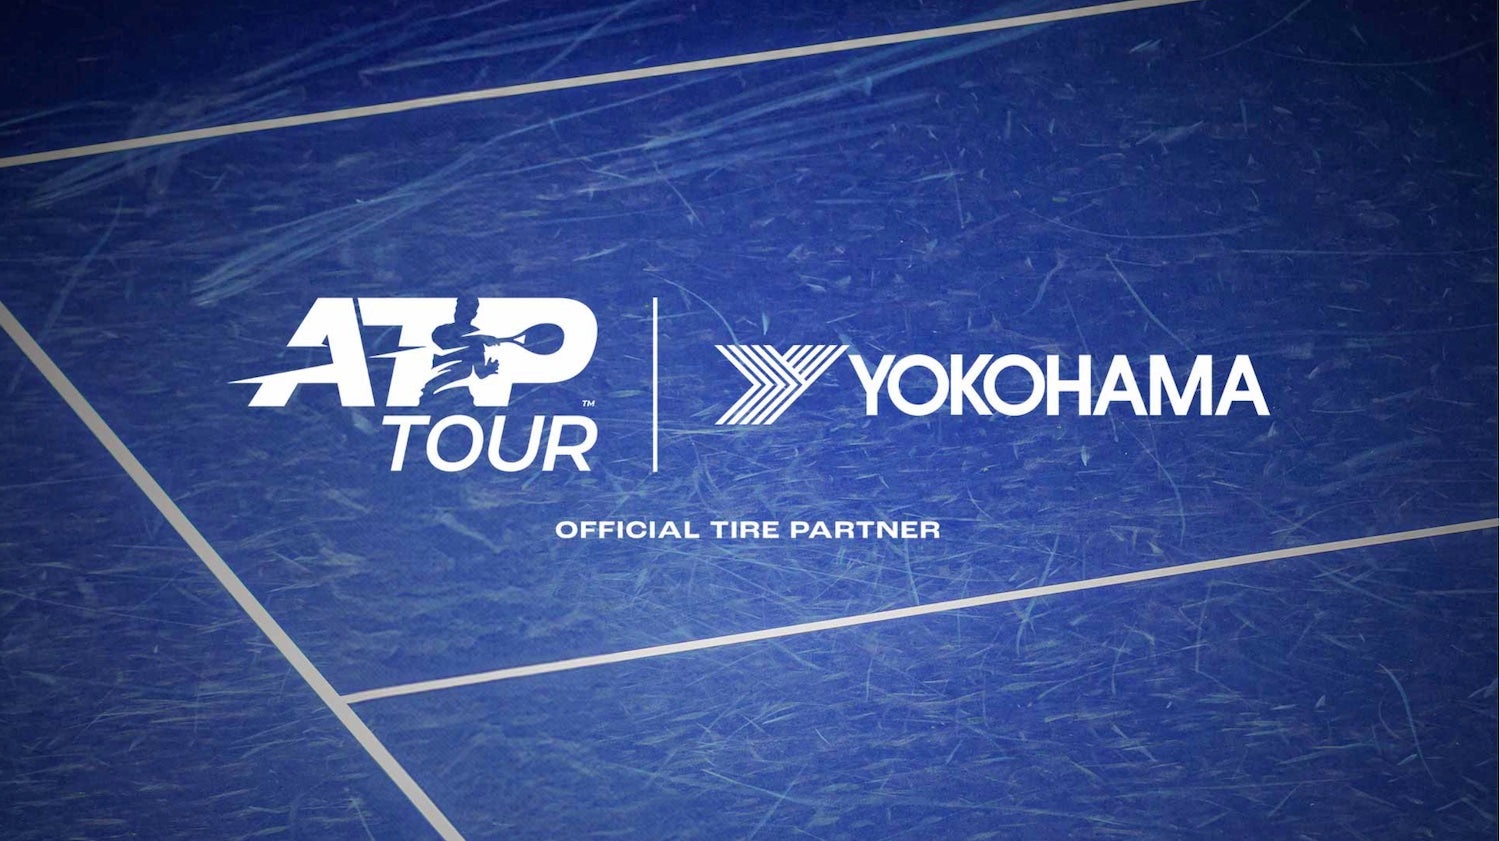 ATP Tour - Yokohama partnership